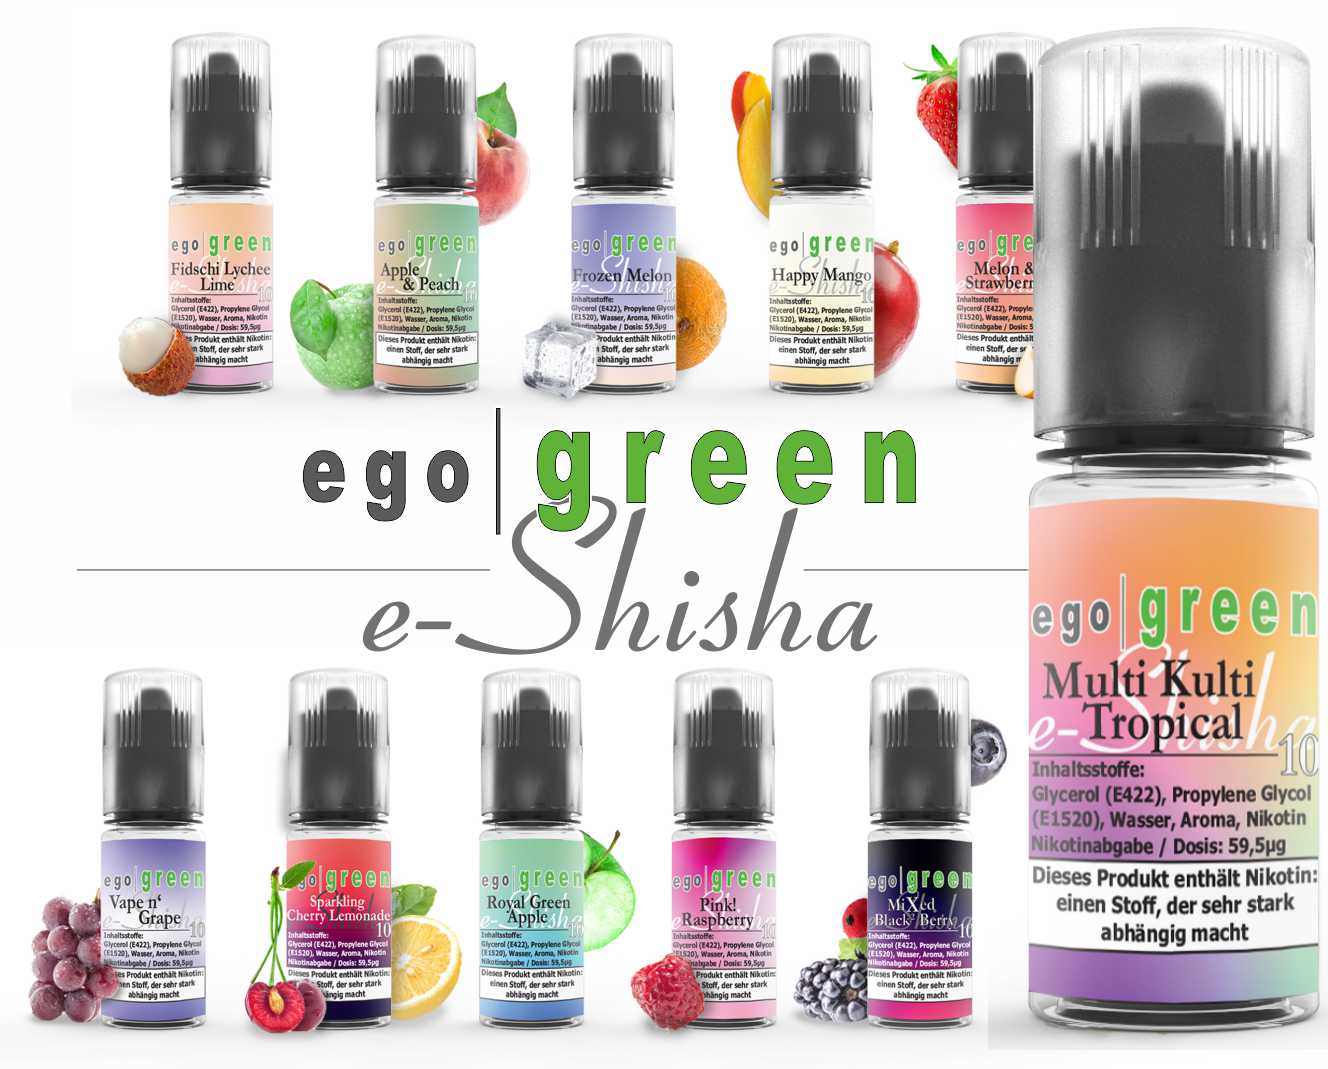 egogreen Multi Kulti Tropical Nikotinsalz e-Shisha Liquid kaufen